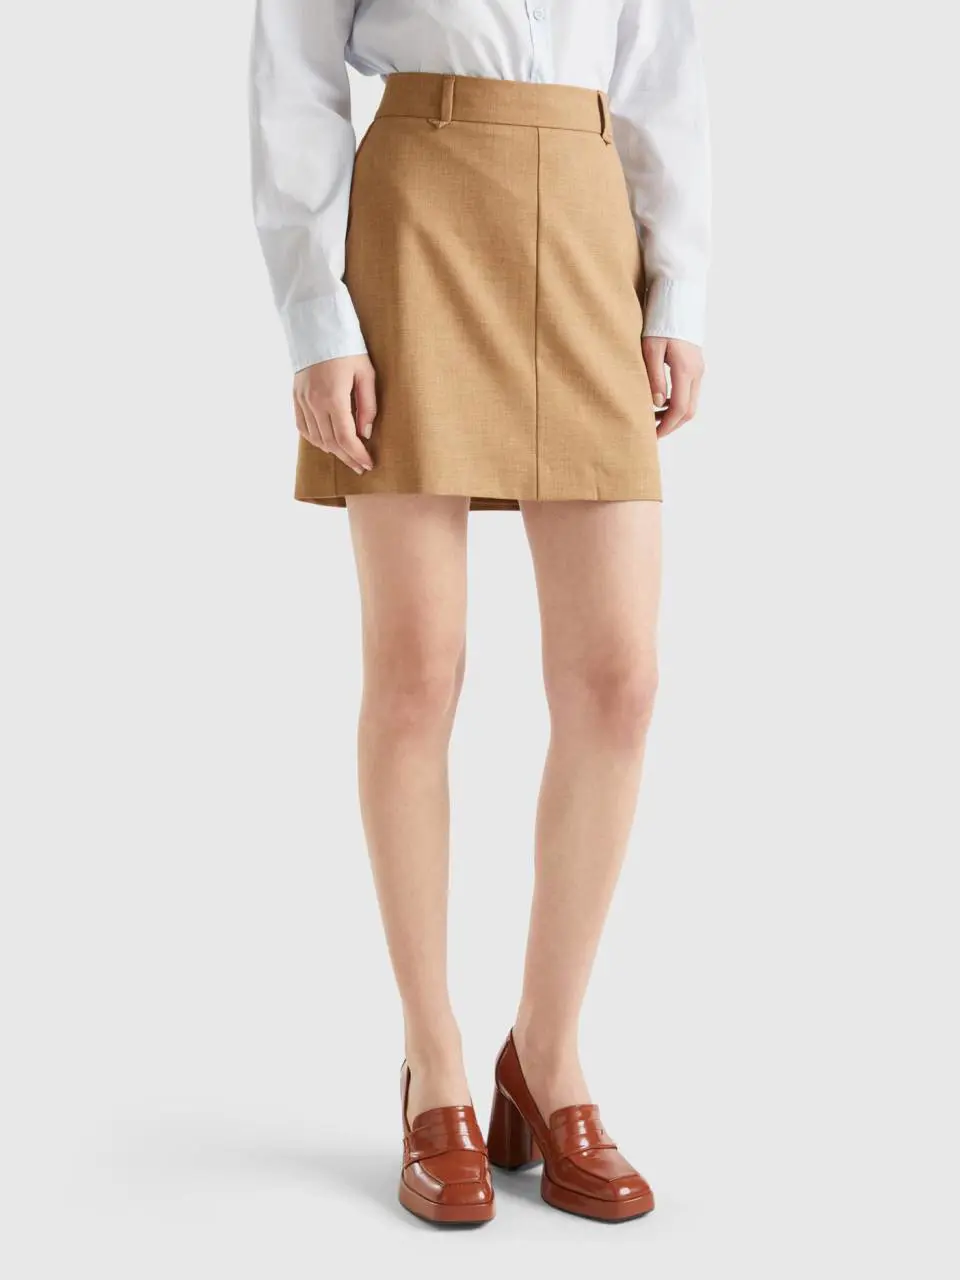 Benetton mini skirt with side zipper. 1